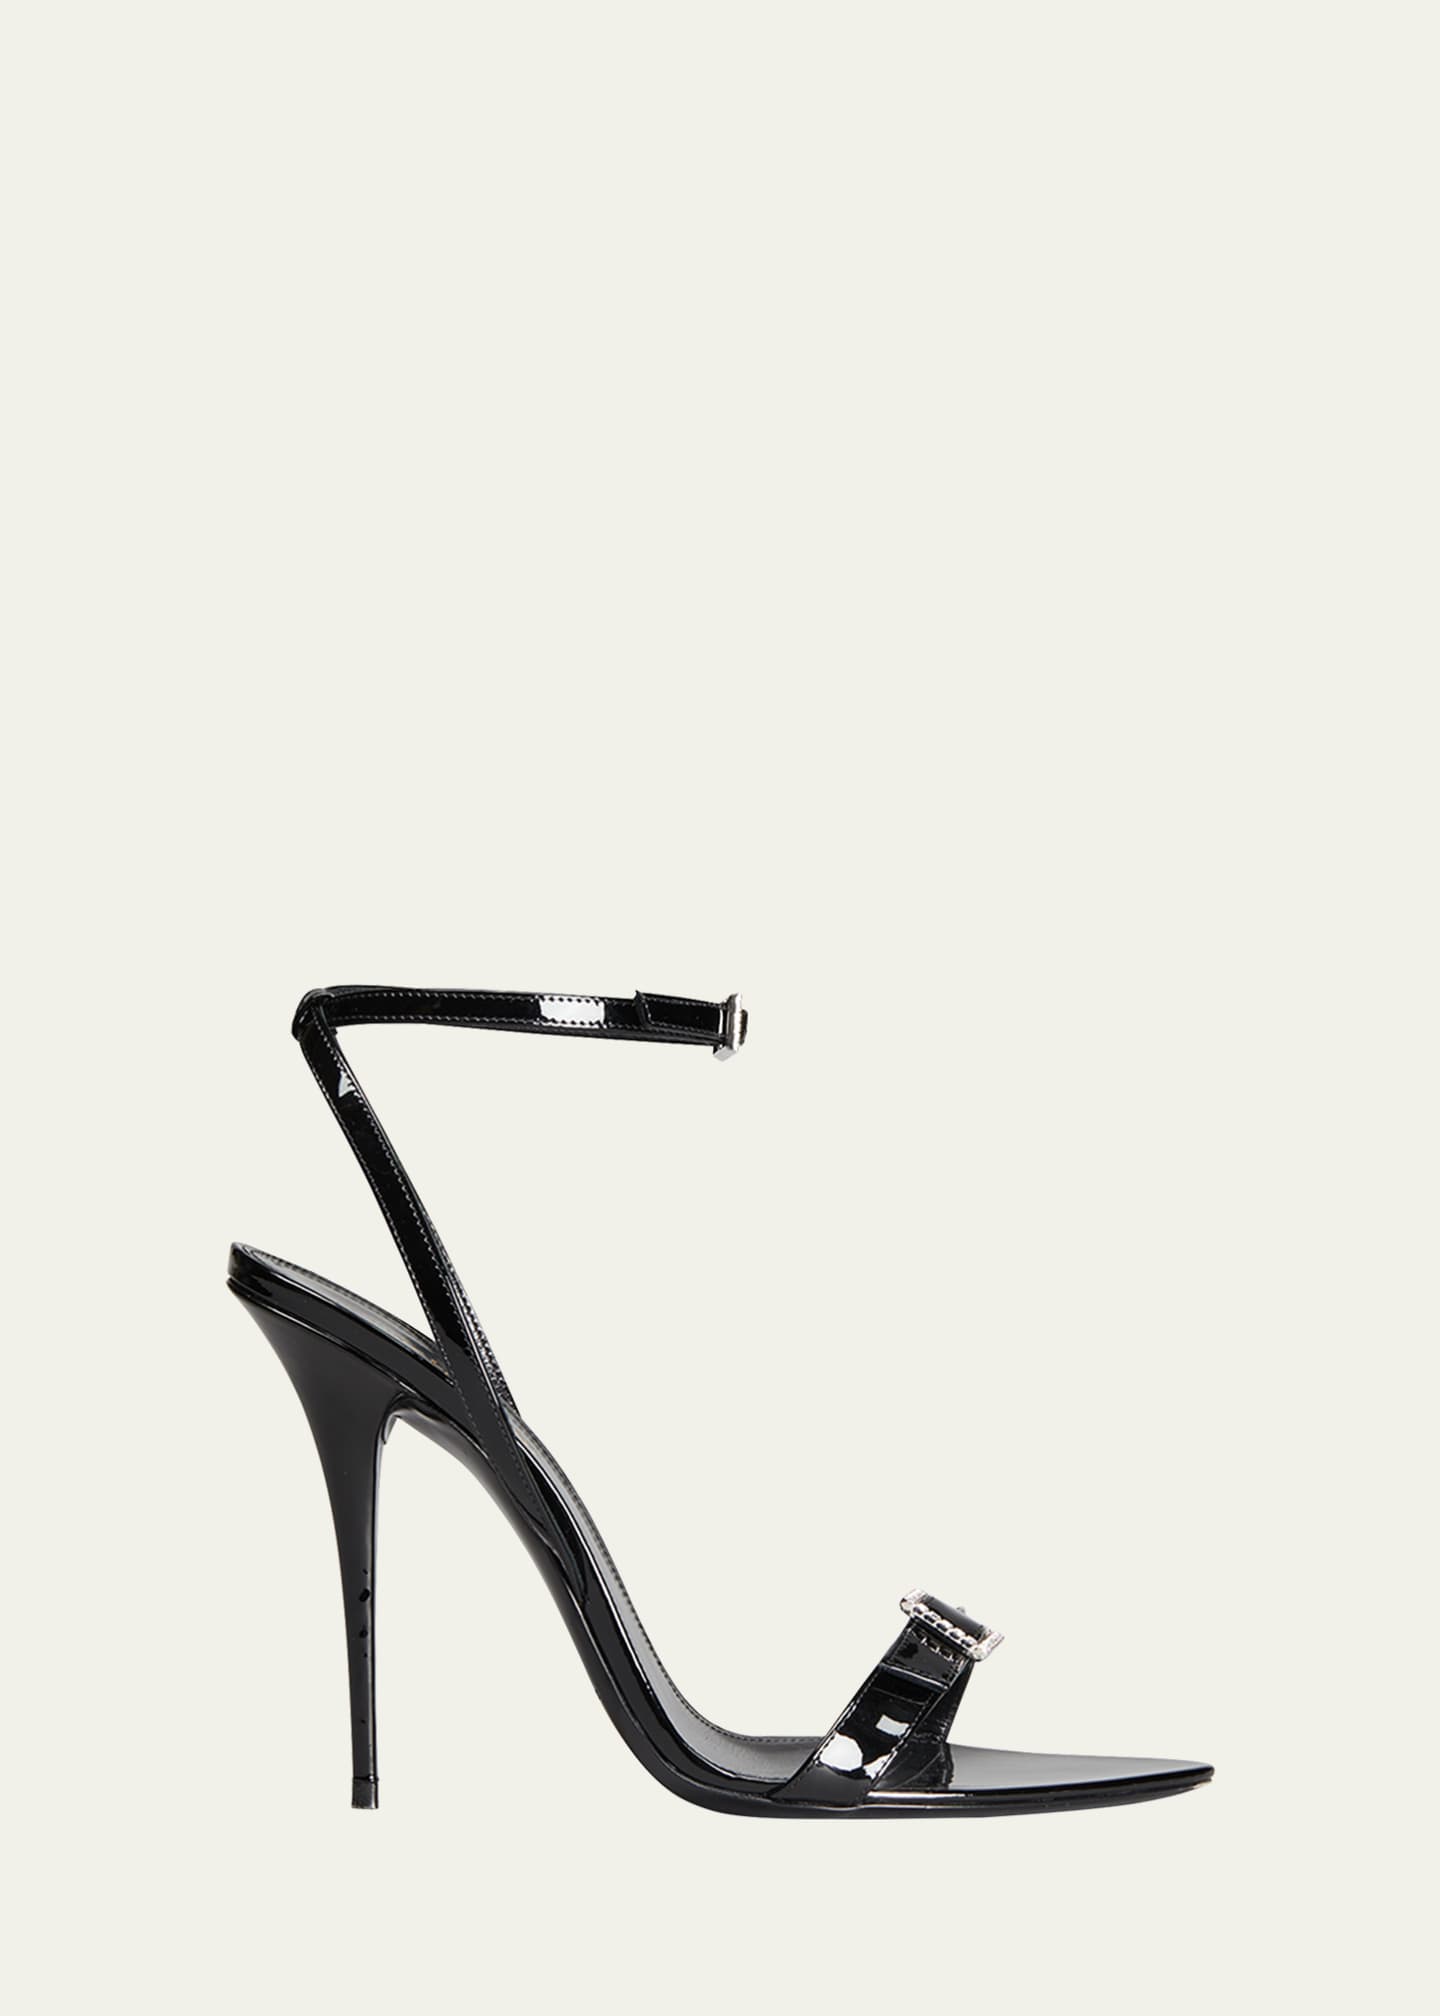 Saint Laurent Patent Crystal-Strap Stiletto Sandals - Bergdorf Goodman